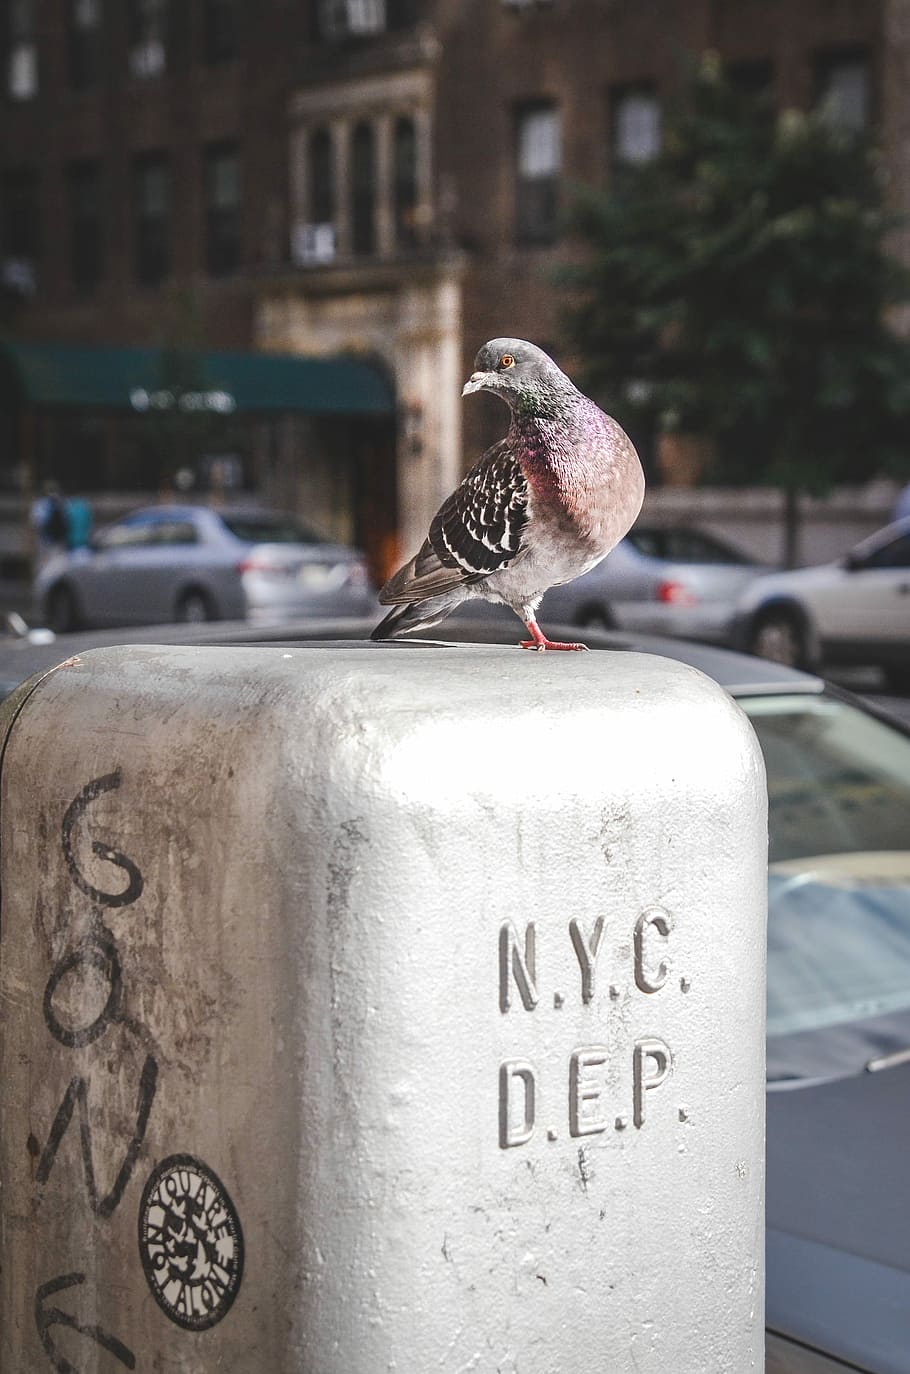 brown bird on gray slab, brown and gray pigeon standing on gray NYC DEP concrete, HD wallpaper